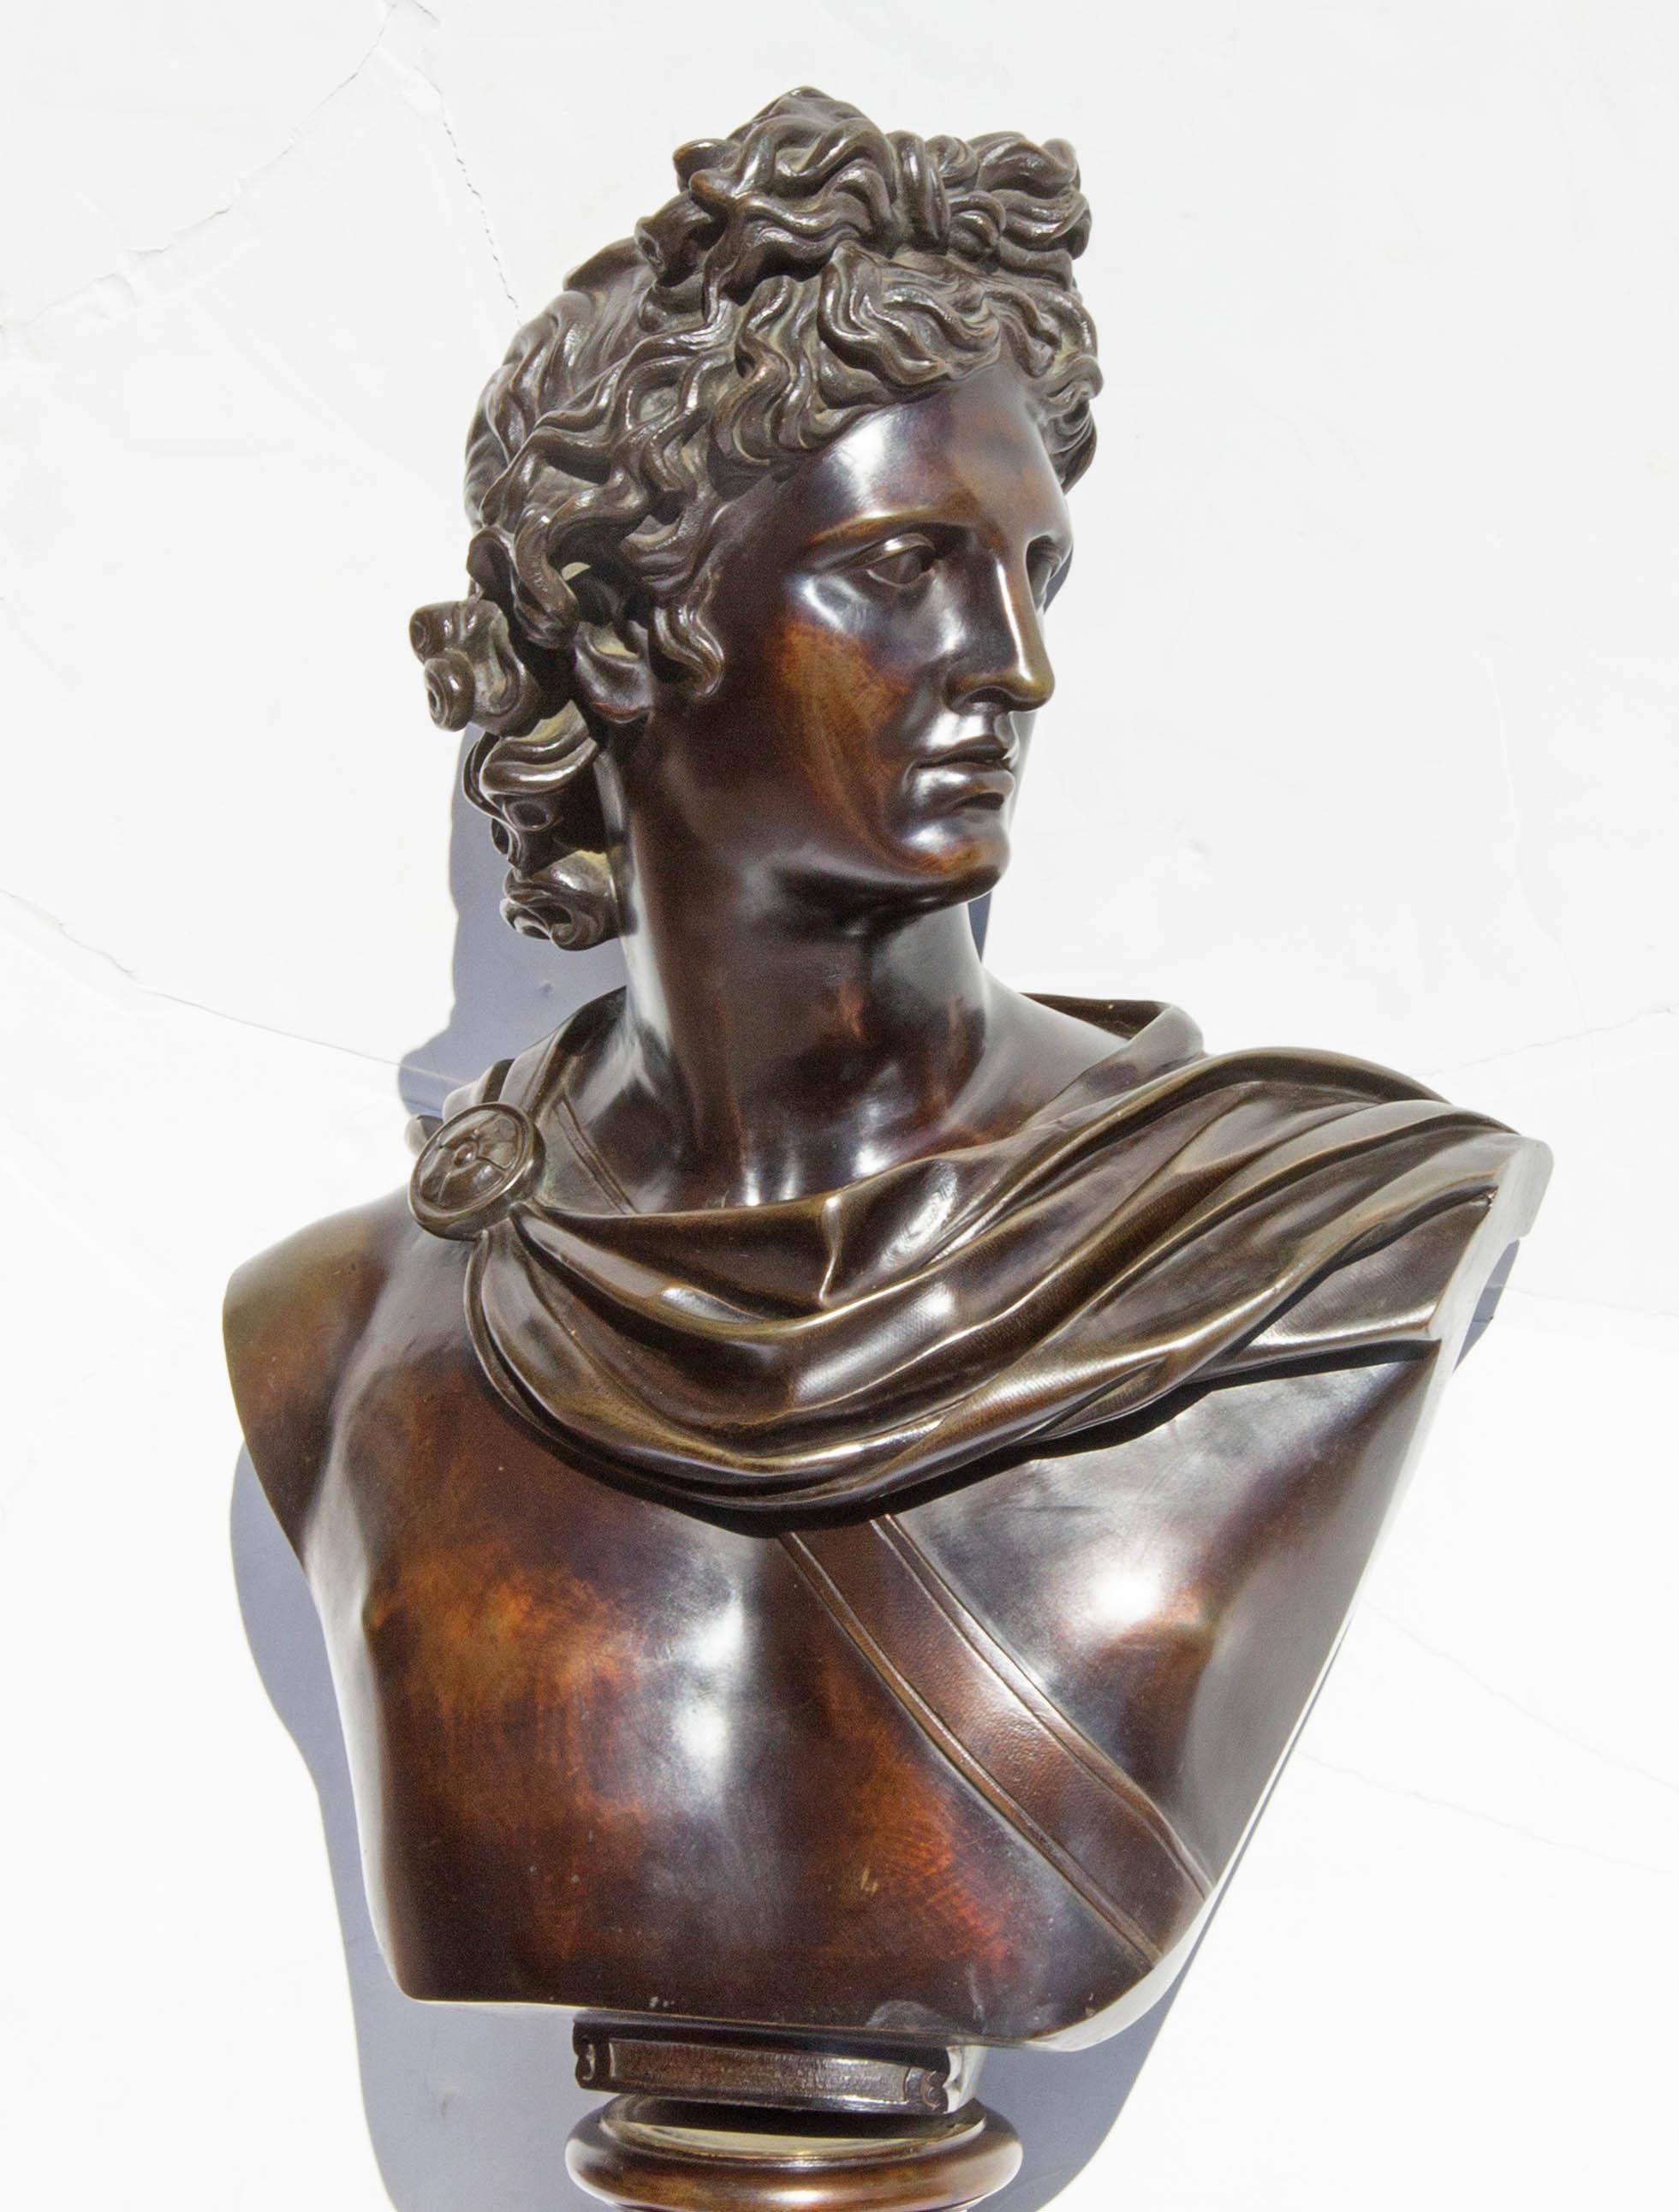 Antique Grand Tour bust of Apollo belvedere.